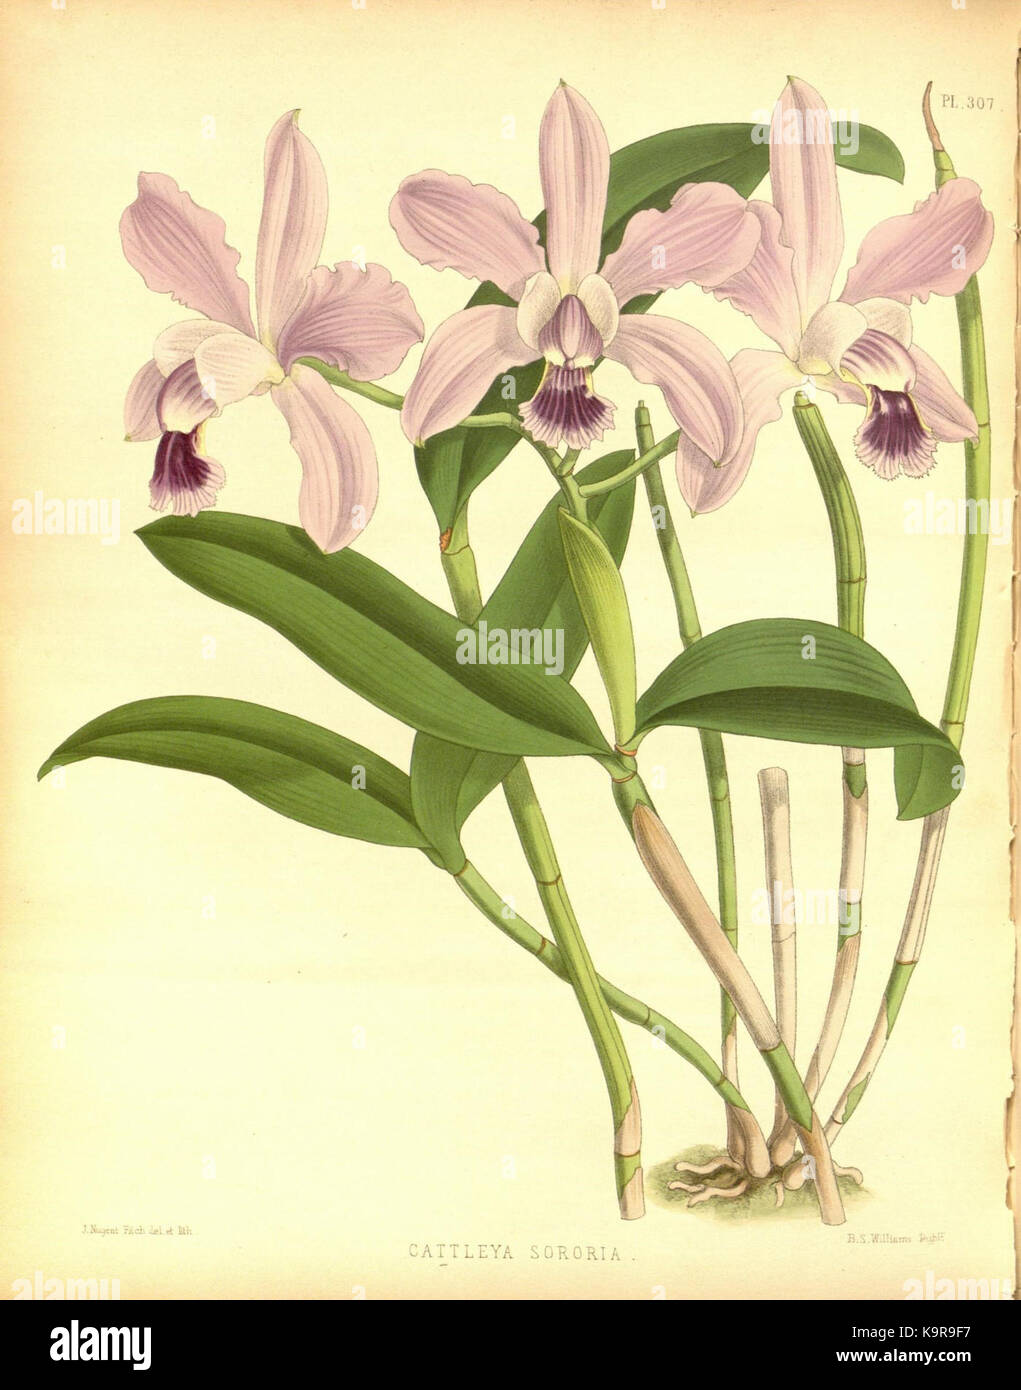 R. Warner & B. SC. Williams l'Orchid Album volume 07 (1888) 307 plaque Banque D'Images